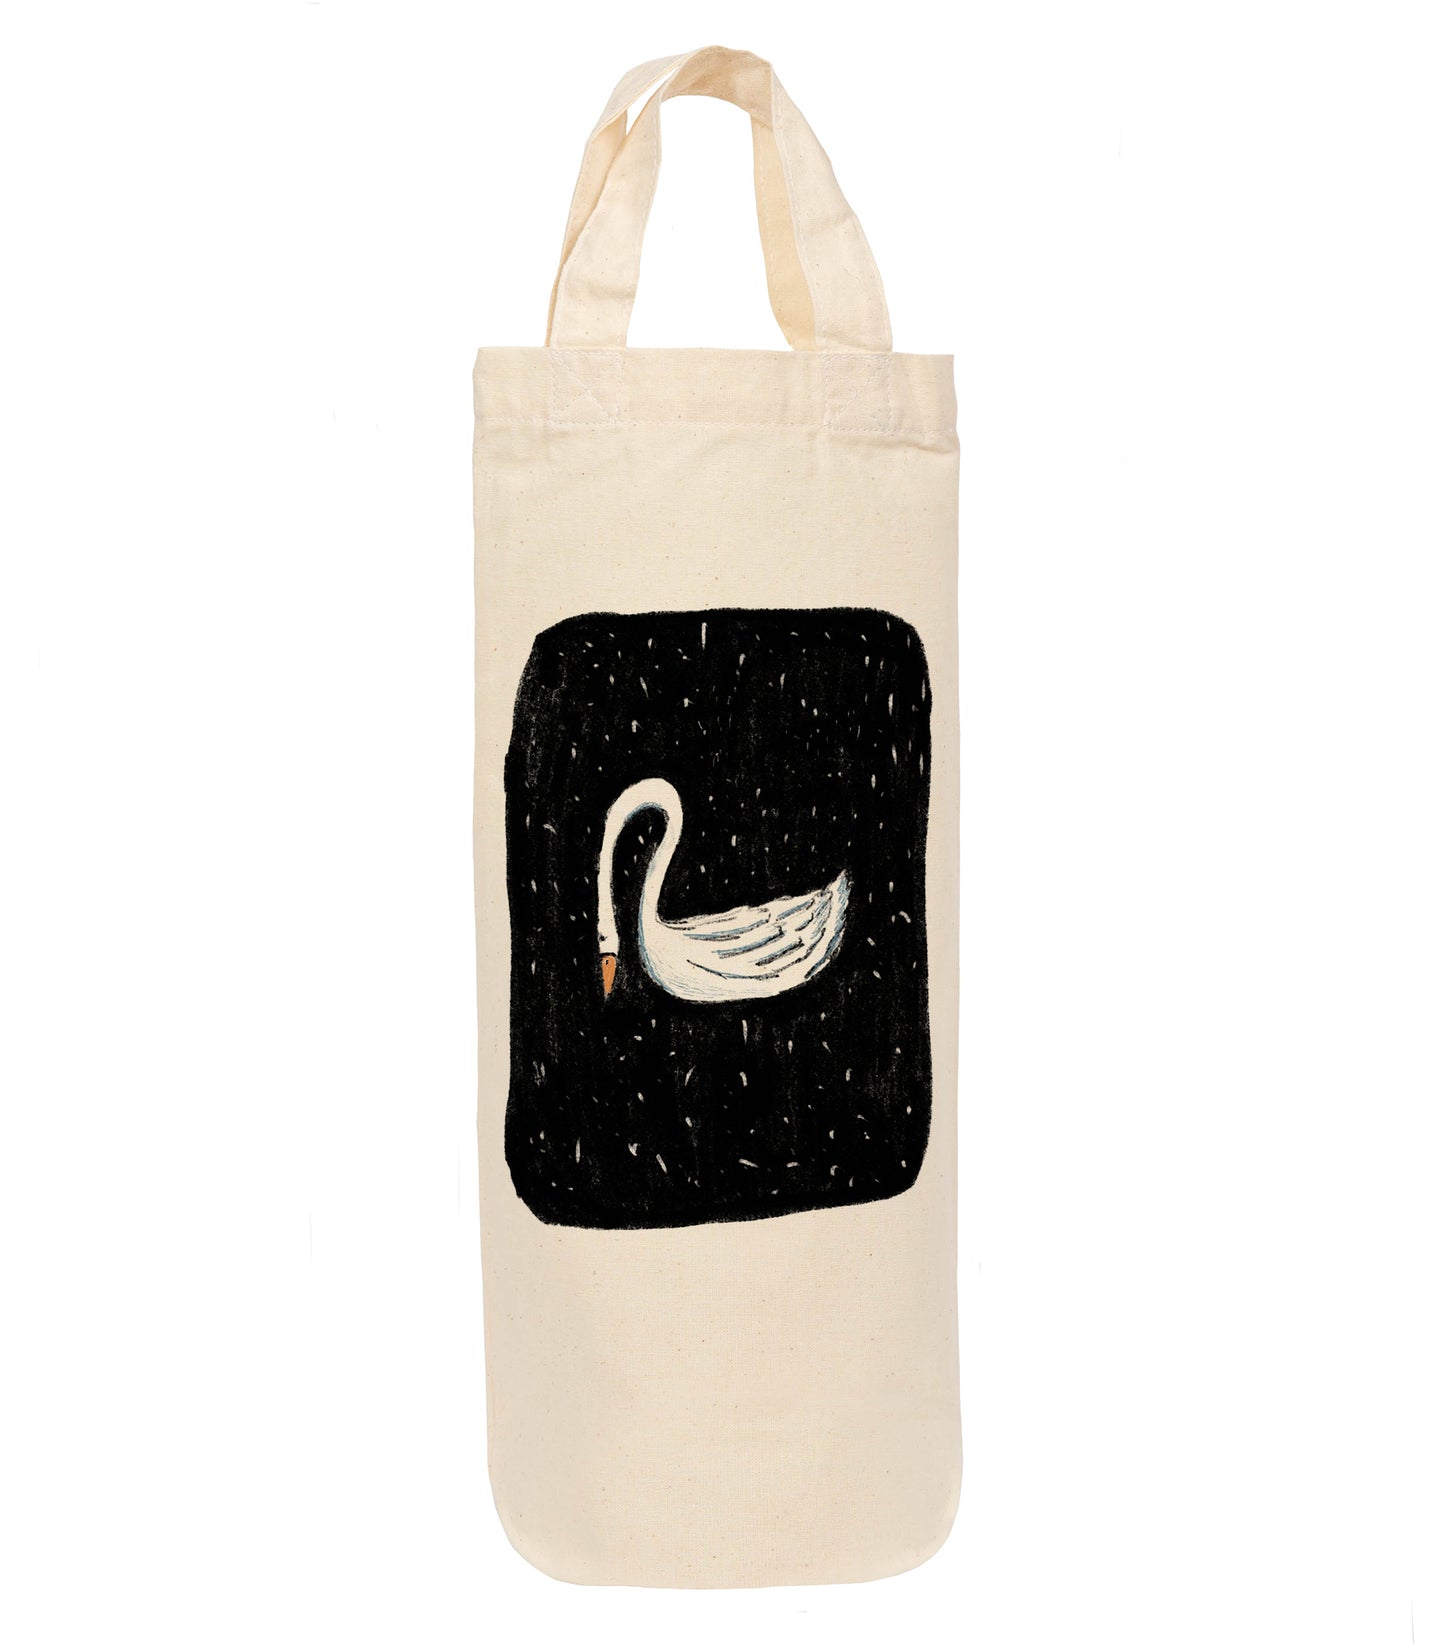 Swan bottle bag - wine tote - gift bag